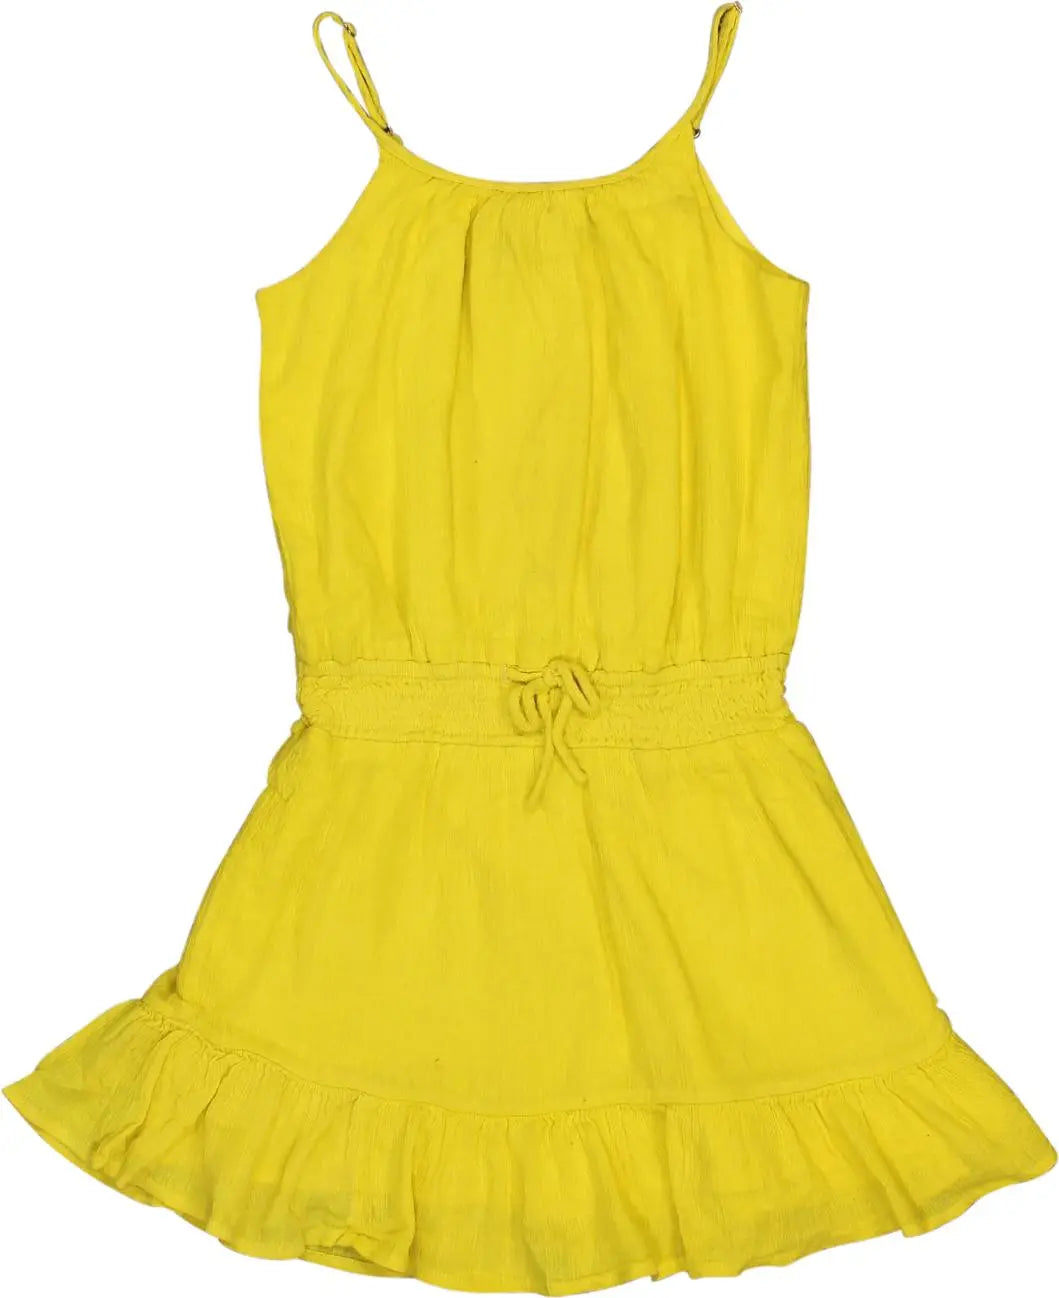 Ralph Lauren - Yellow Dress by Ralph Lauren- ThriftTale.com - Vintage and second handclothing